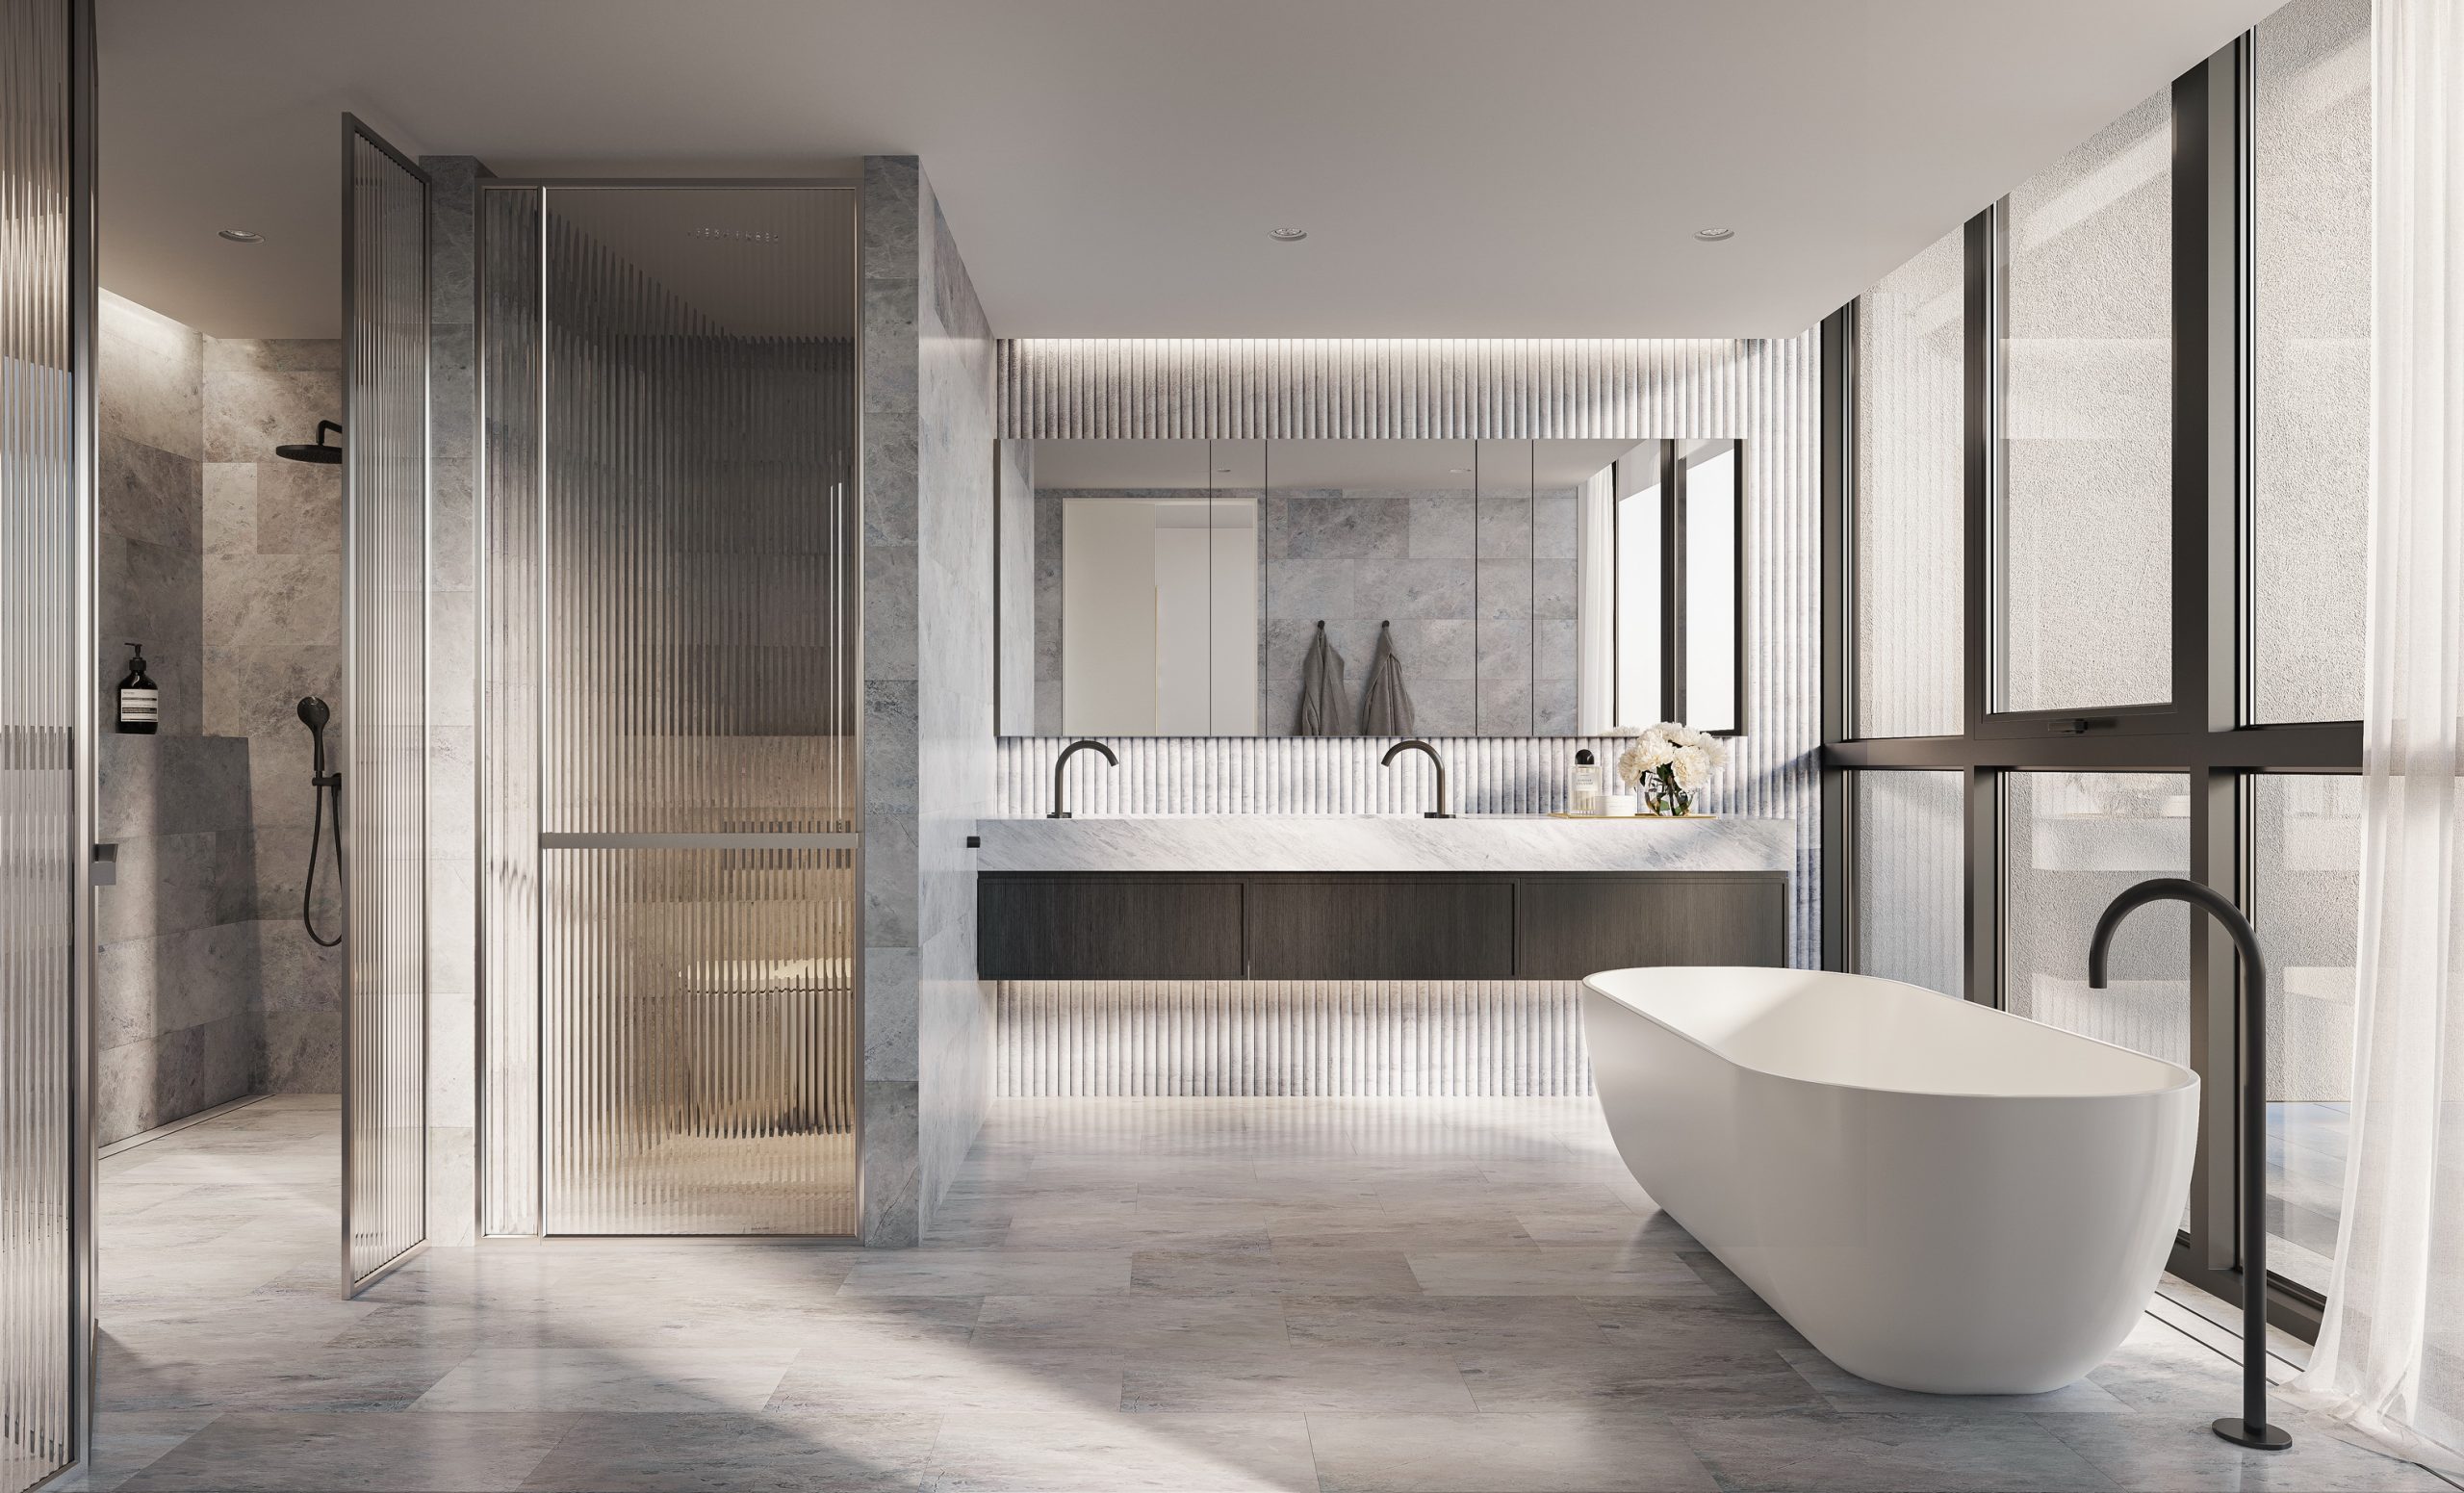 Rivello-queensland-render-3d-fkd-studio-architecture-luxury-interior-design